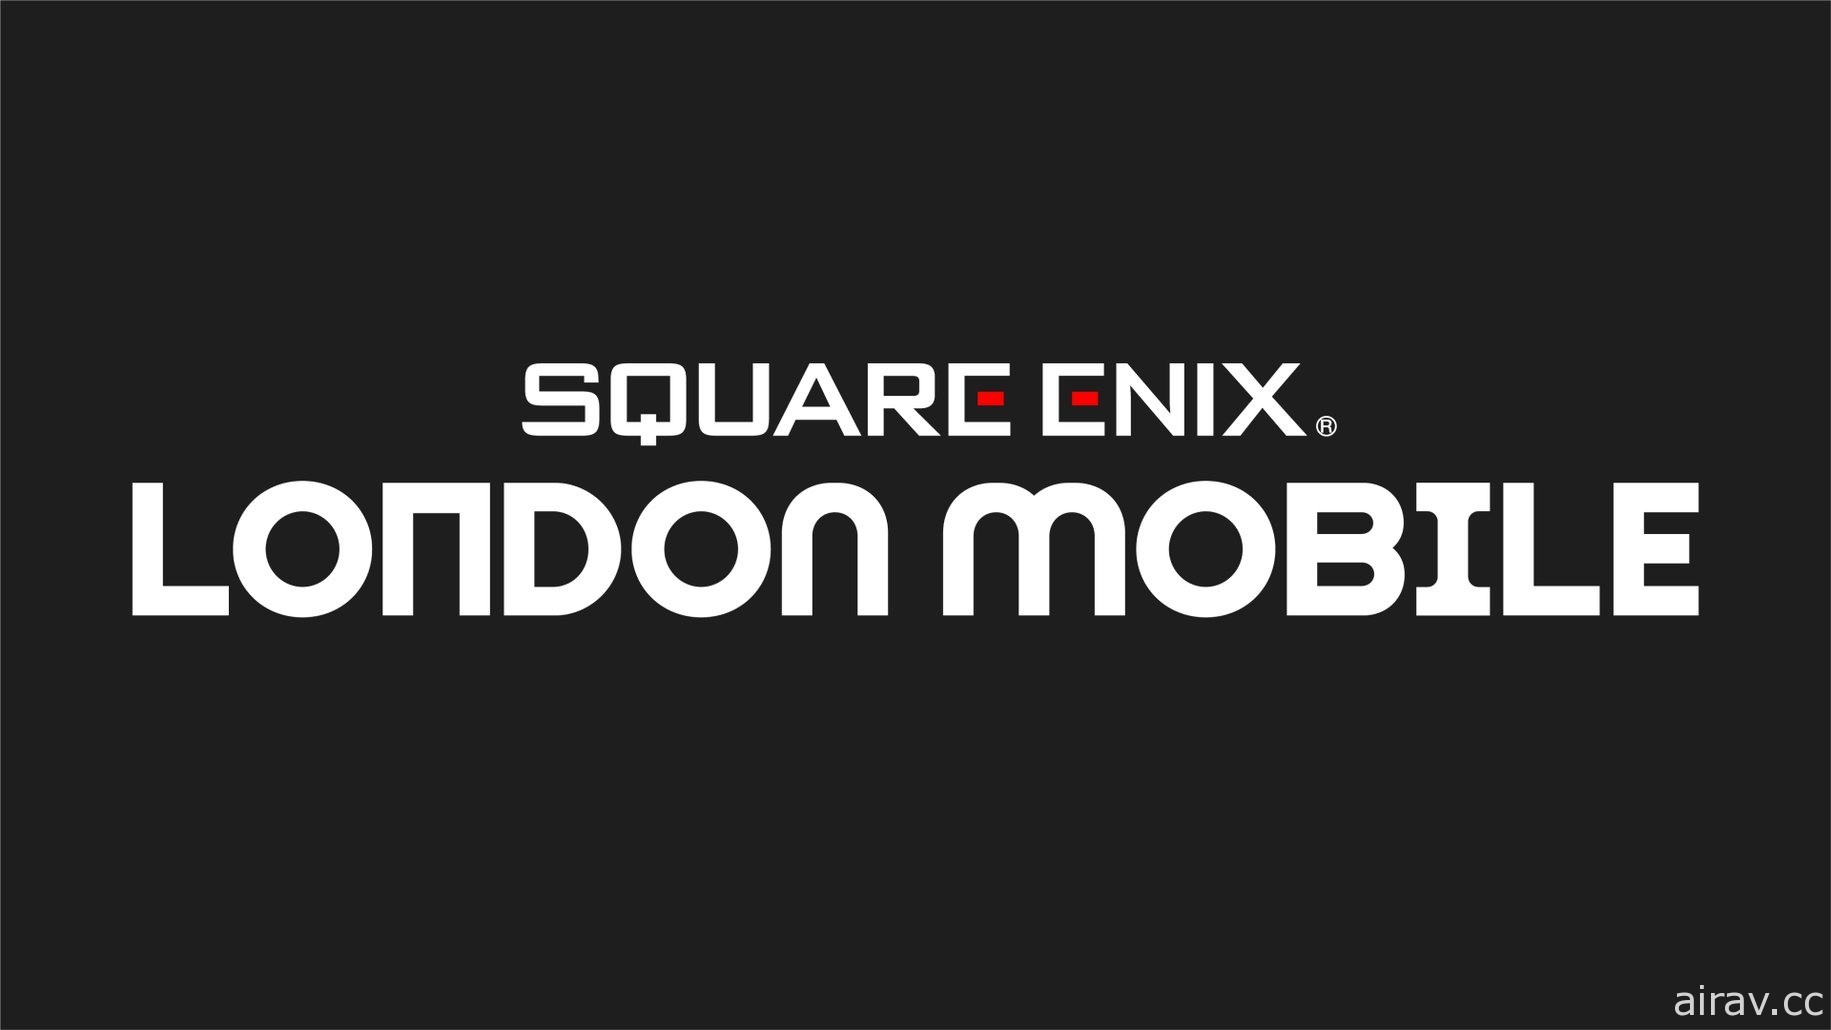 神祕新作？SQUARE ENIX Studio London Mobile 為 RPG 新作募集 Beta 測試玩家